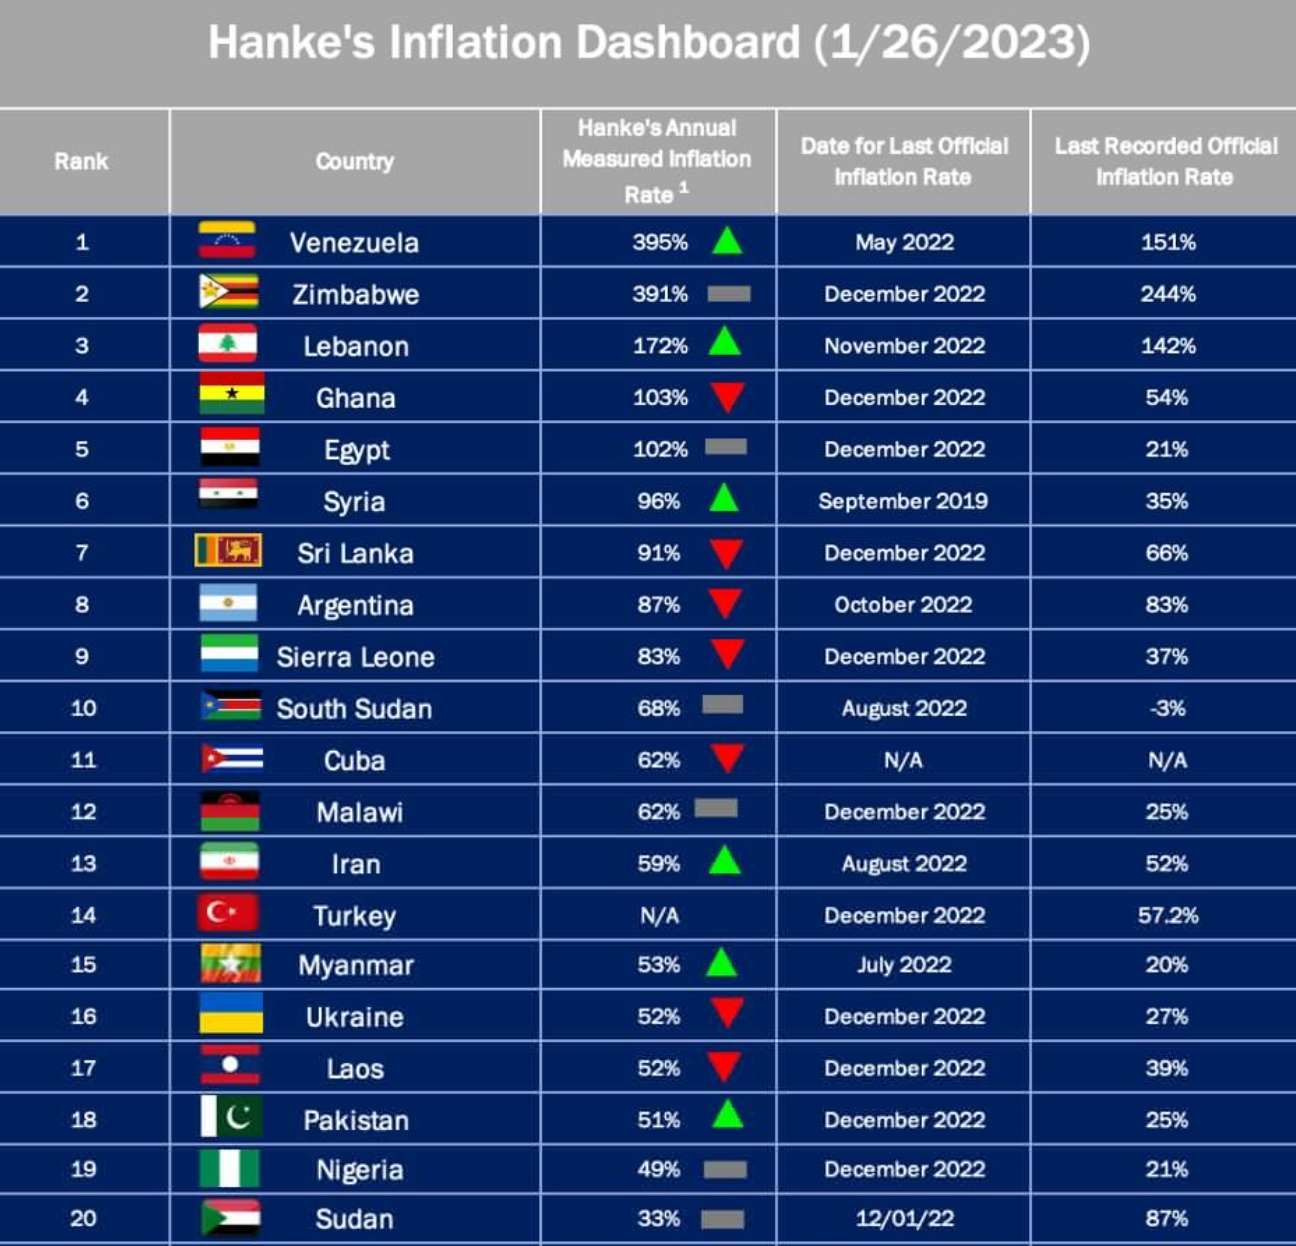 Nigeria is on rank 20 of the worst performing currencies. Source: https://twitter.com/steve_hanke/status/1620791585653882880/photo/1